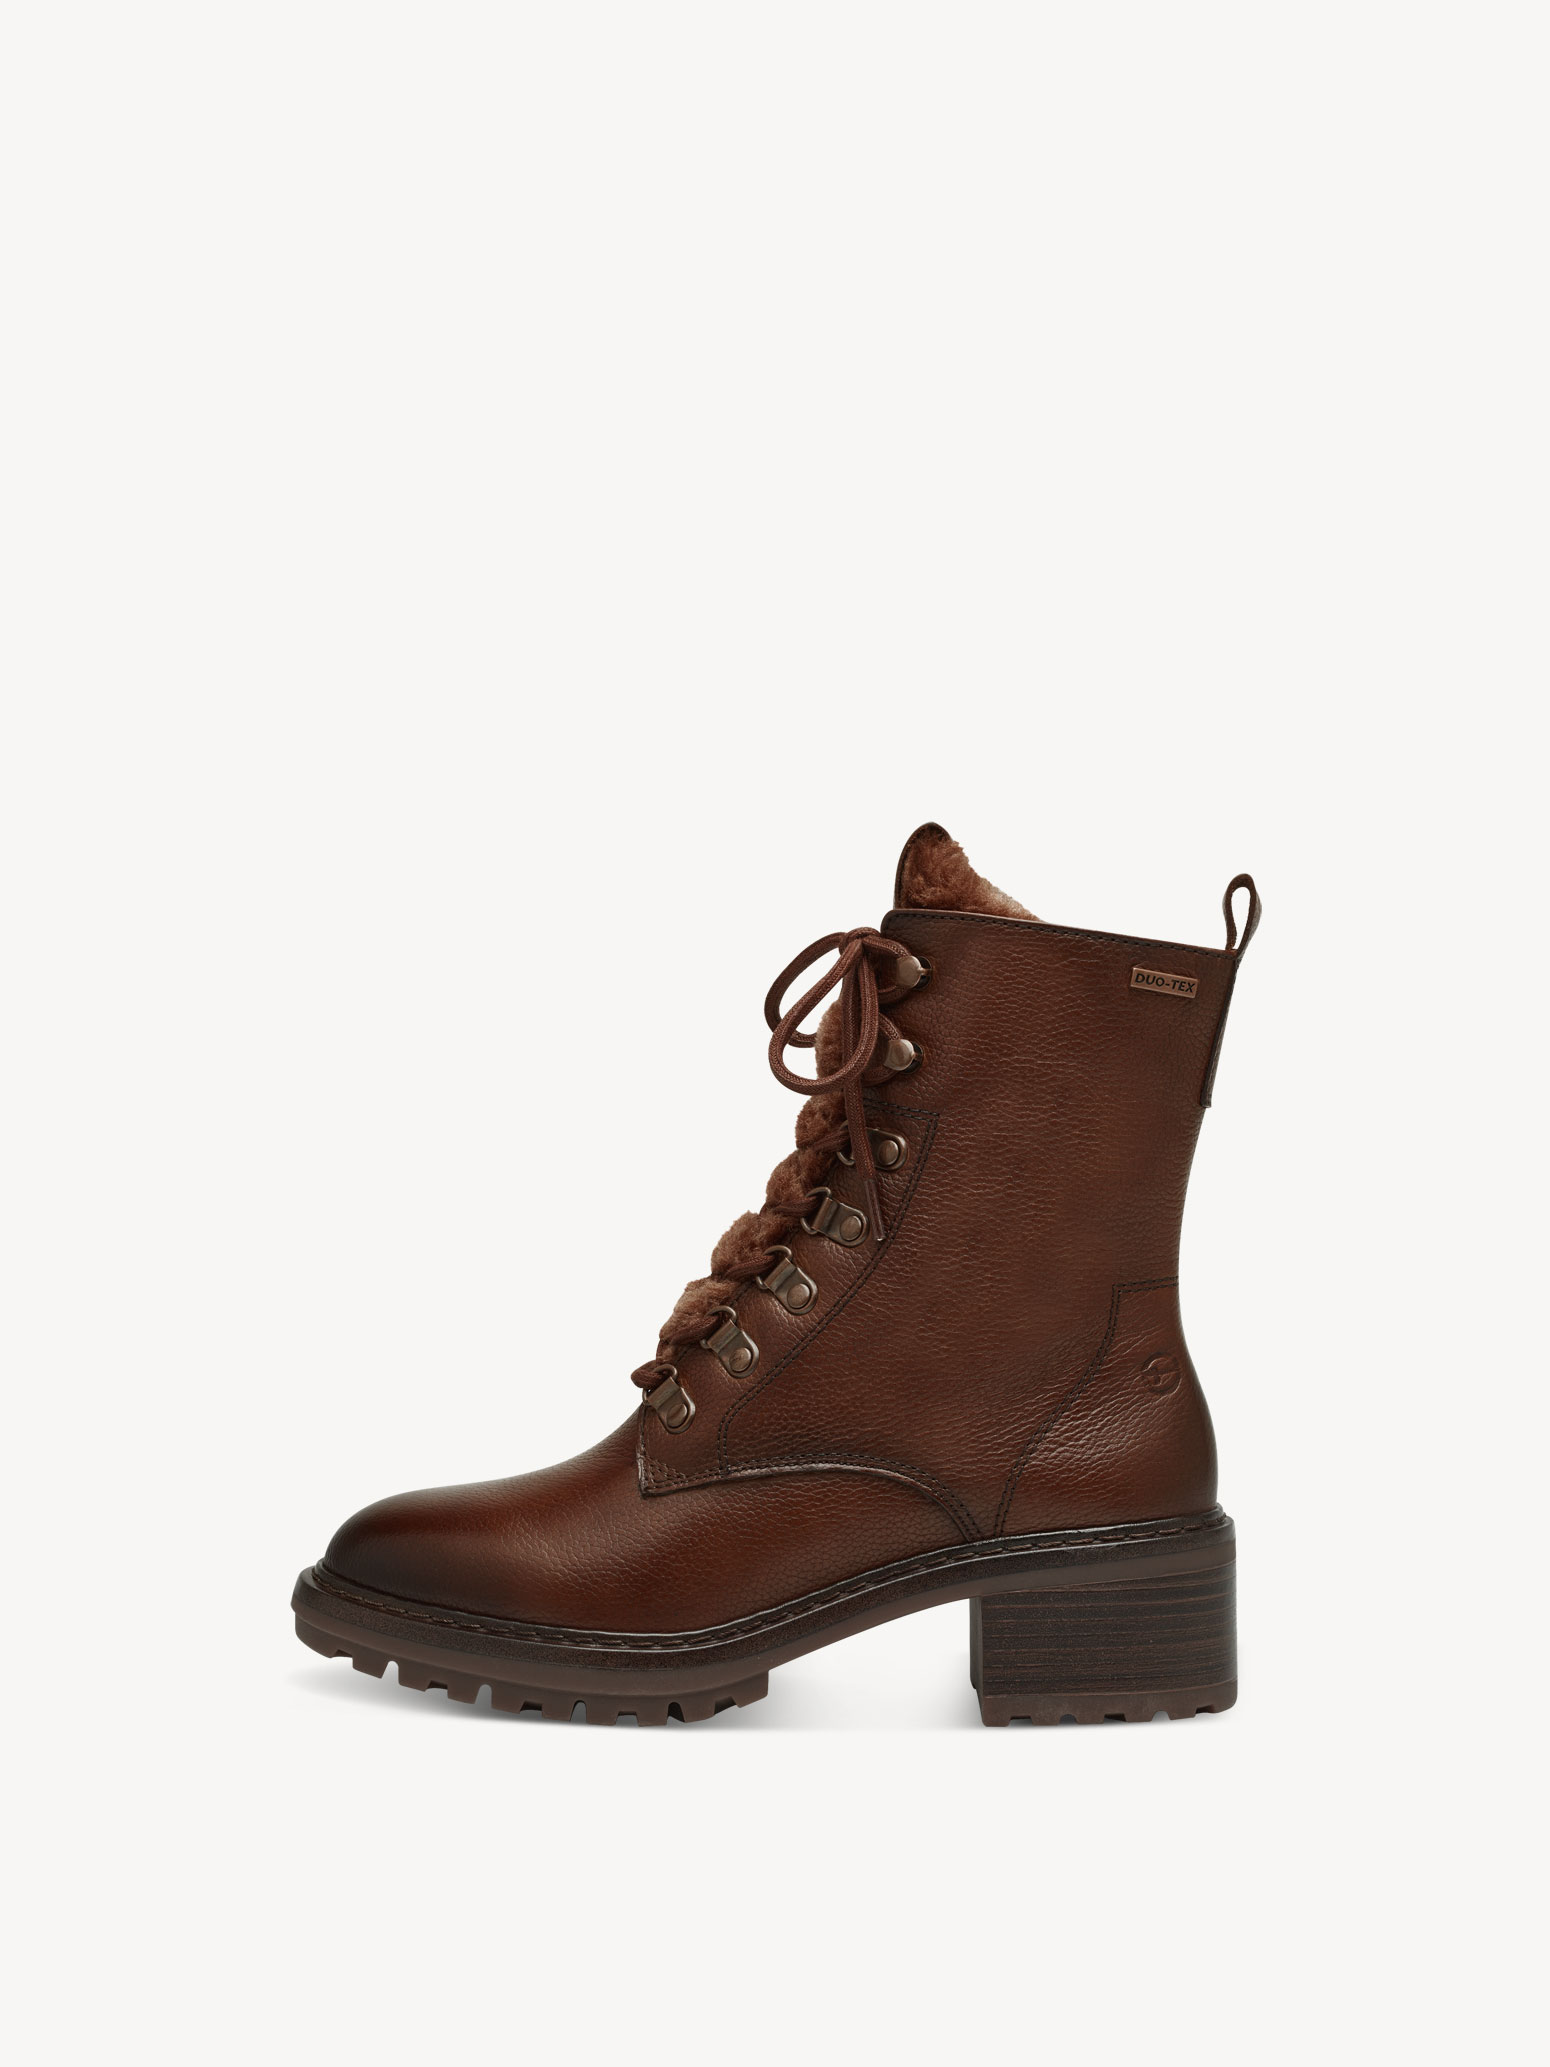 Leather Bootie - brown warm lining Buy Booties online!